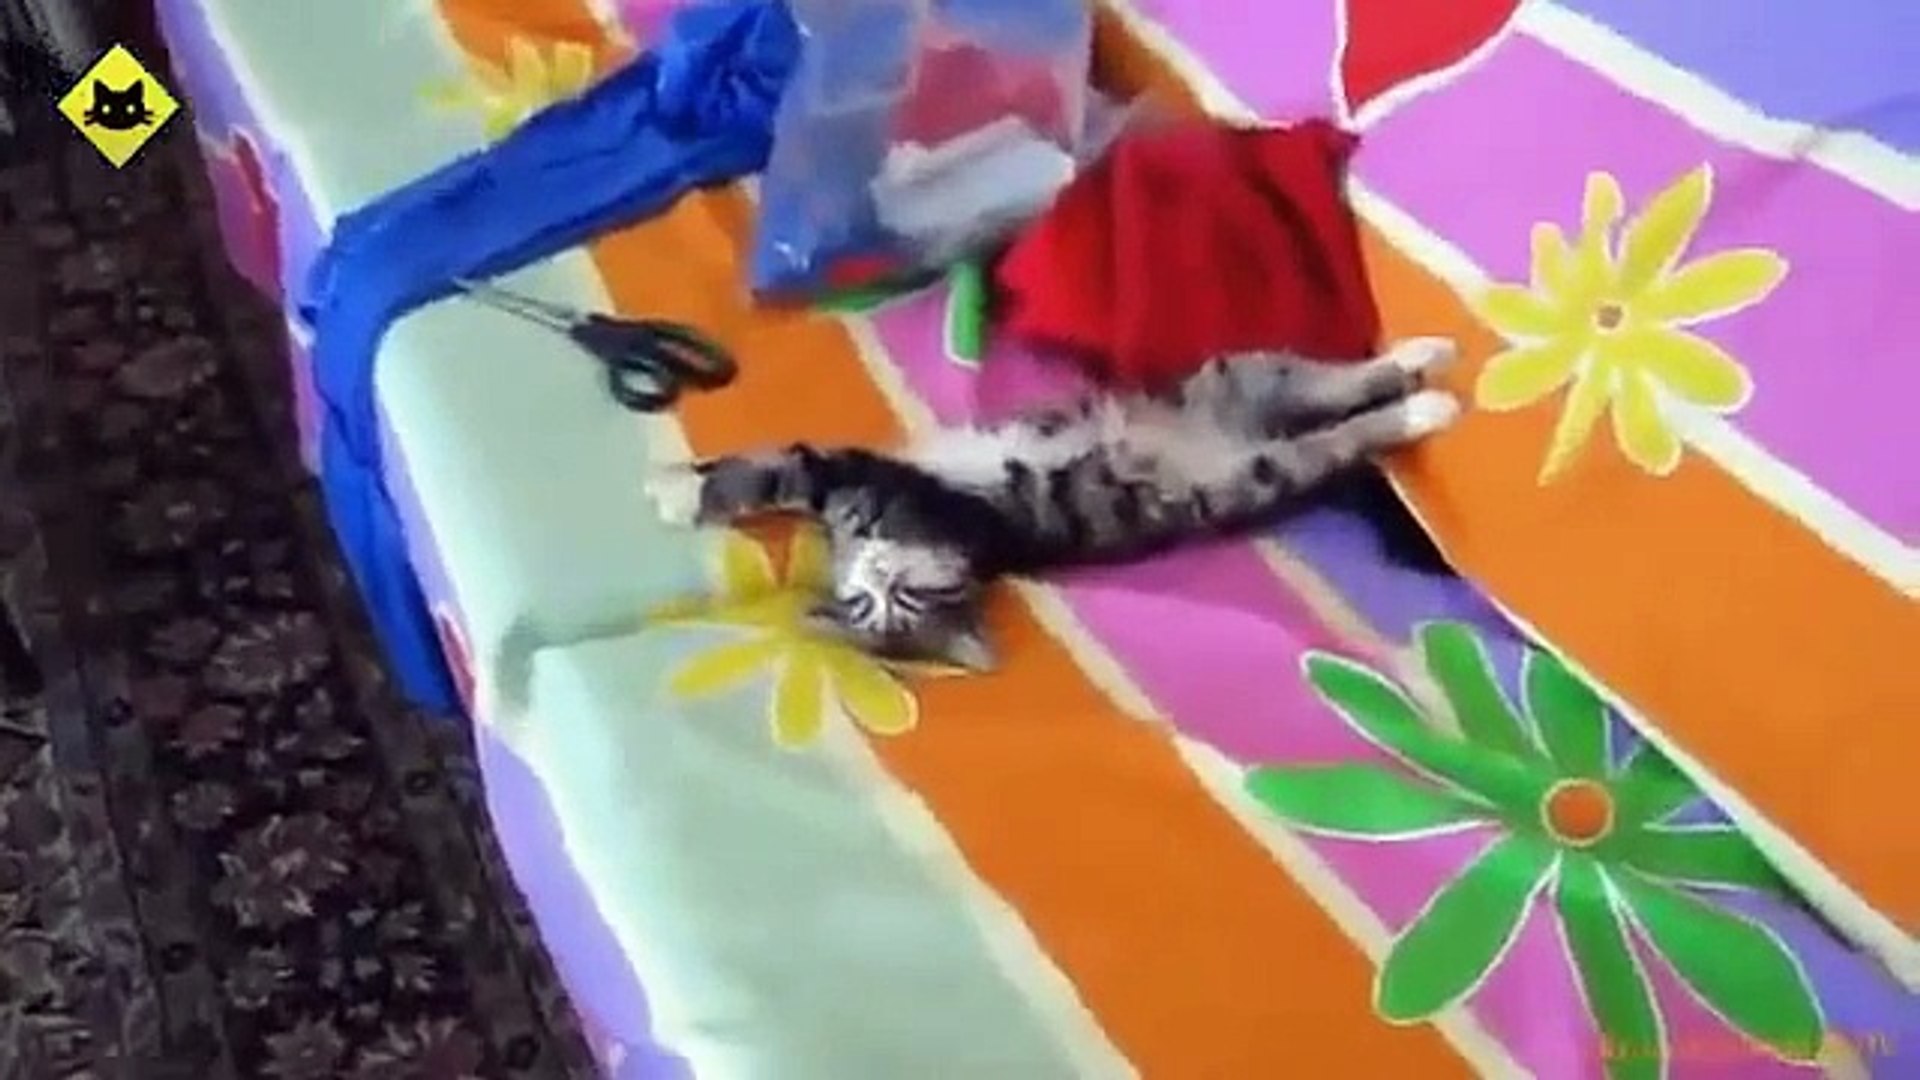 Funny Cats - Funny Cat Videos - Funny Animals - Funny Fails - Funny Cats Sleeping 2015